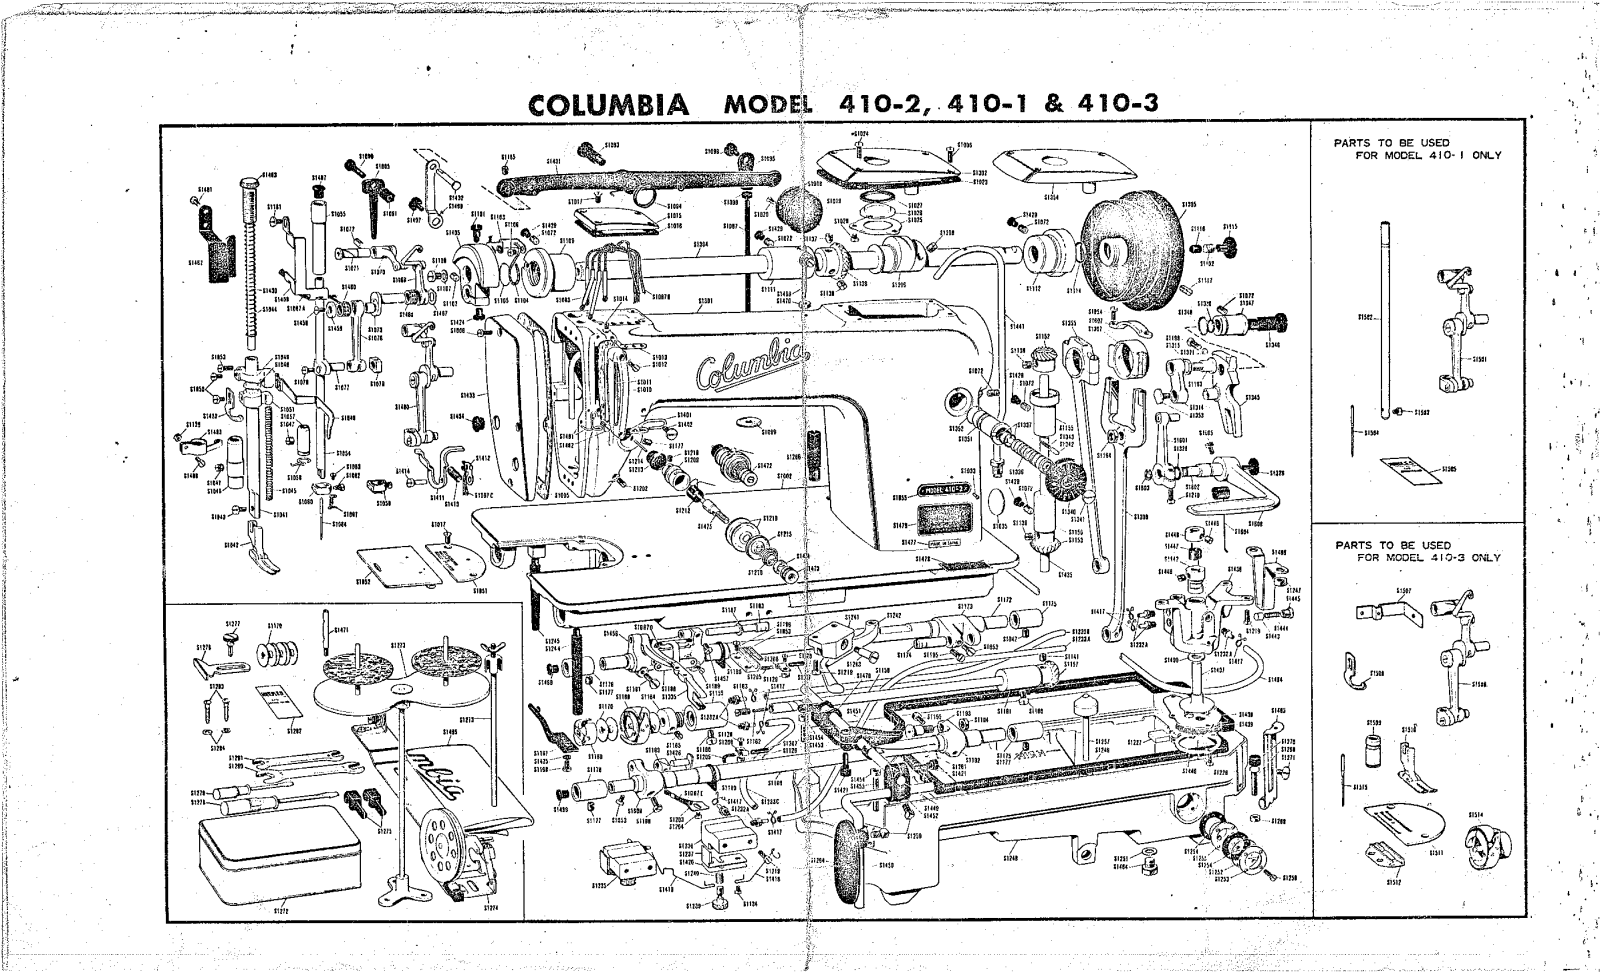 Union Special Columbia 410-1, Columbia 410-2, Columbia 410-3 Parts List